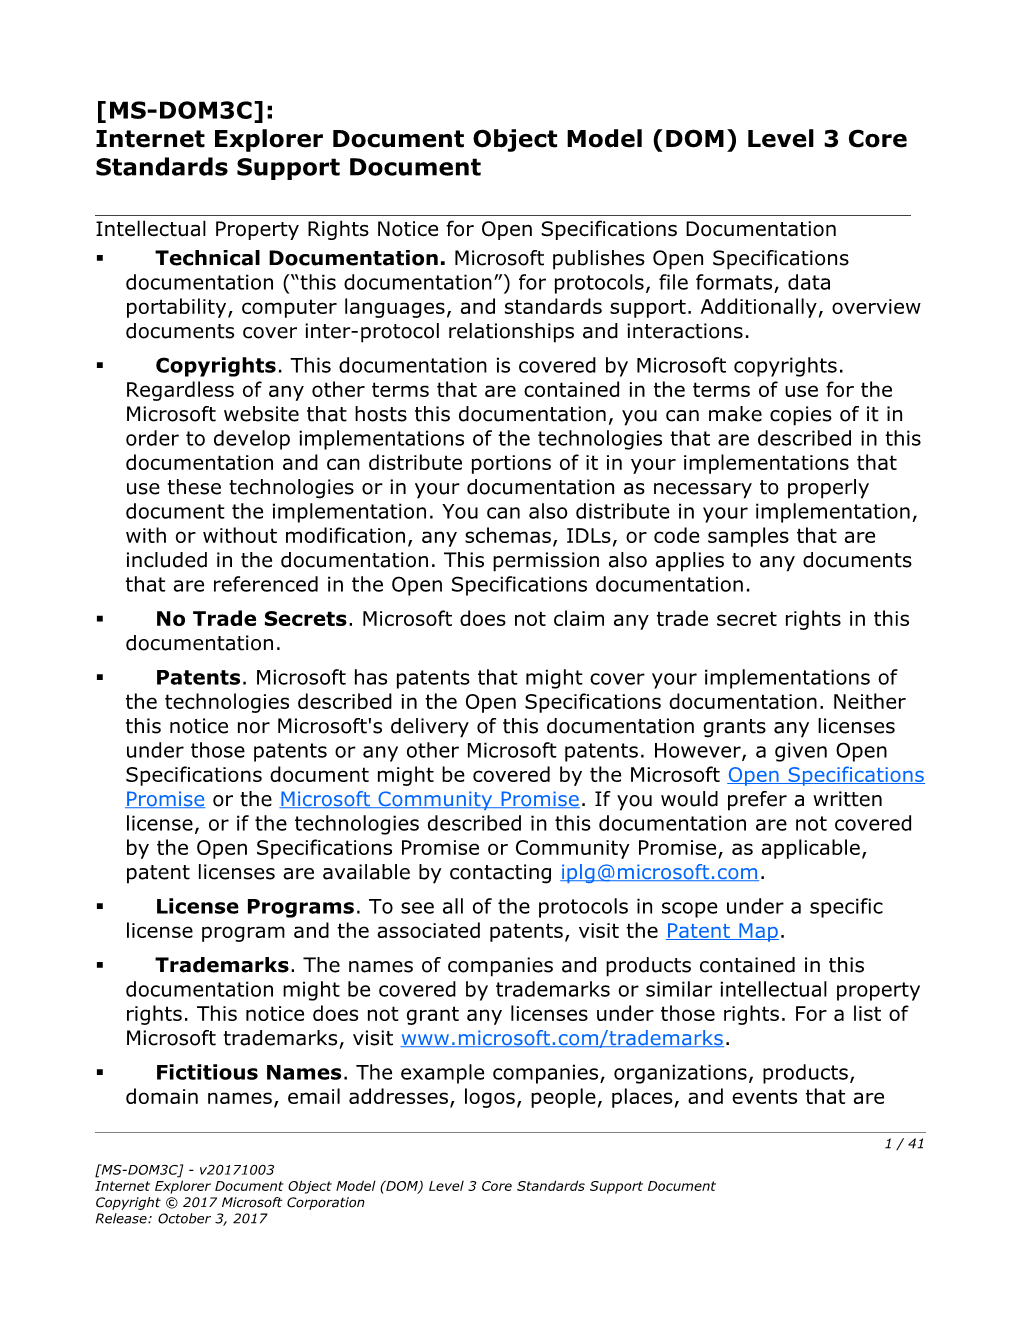 Internet Explorer Document Object Model (DOM) Level 3 Core Standards Support Document